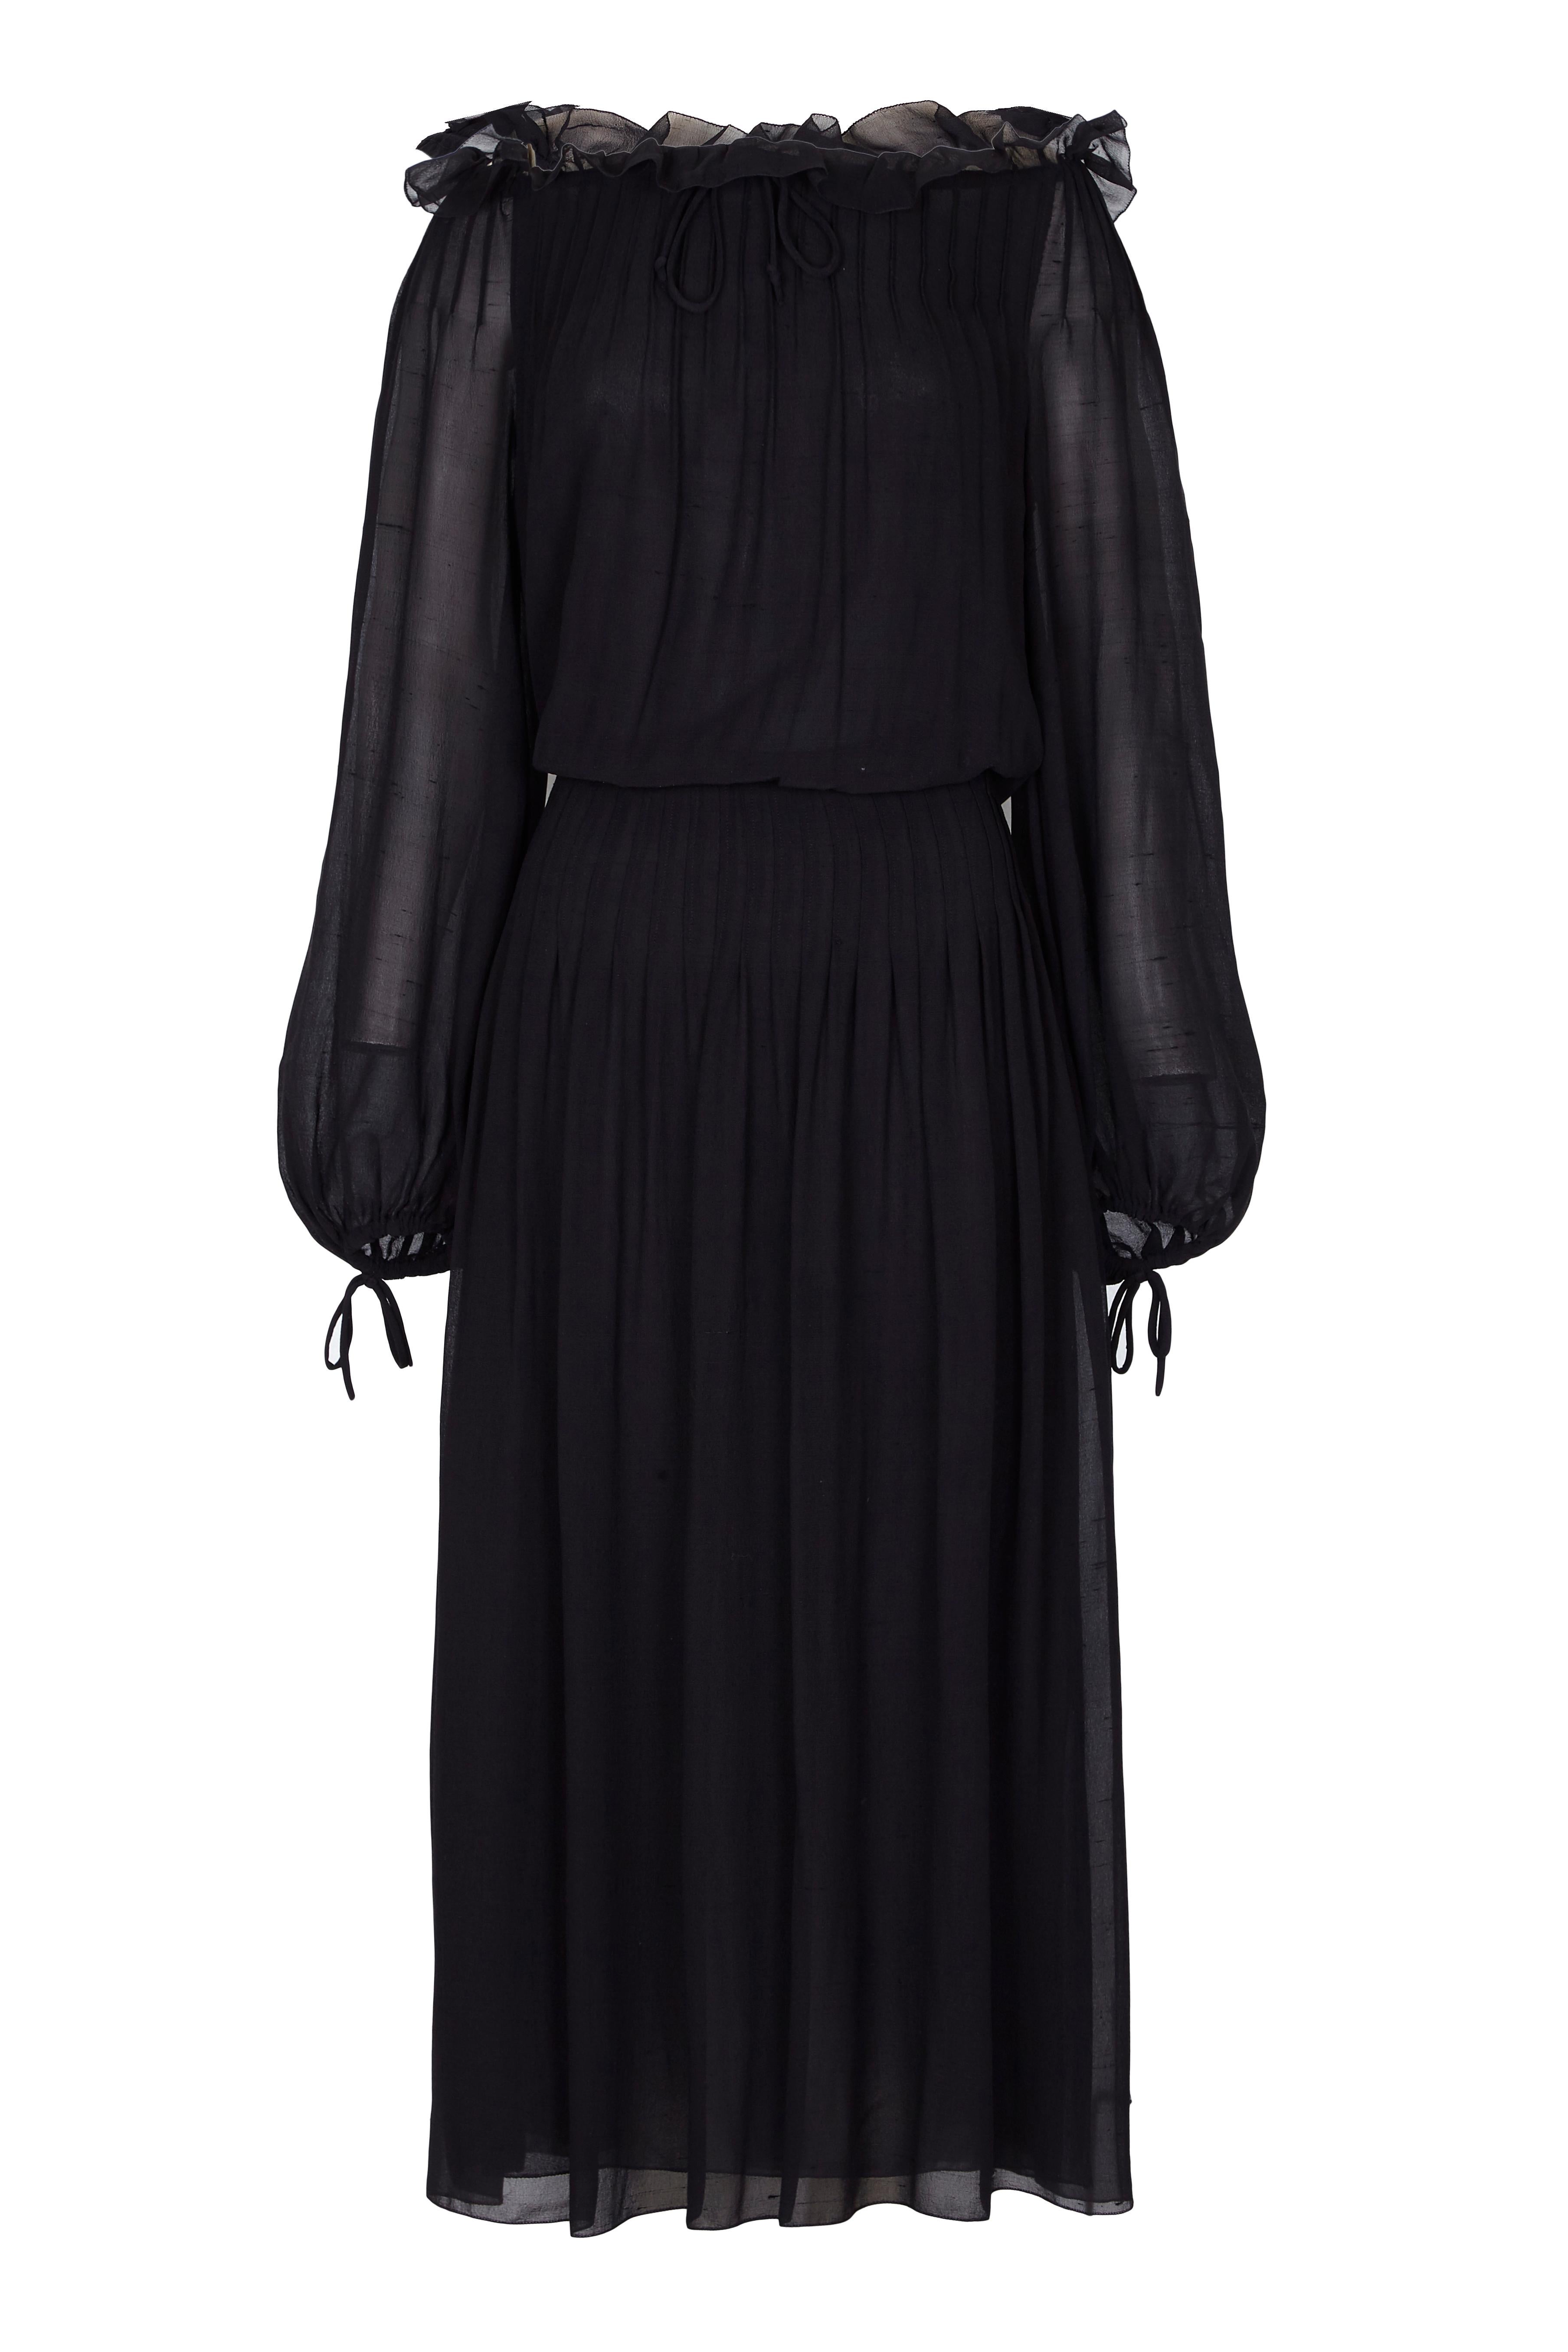 Women's 1970s Christian Dior Boutique Couture Label Black Silk Chiffon Dress